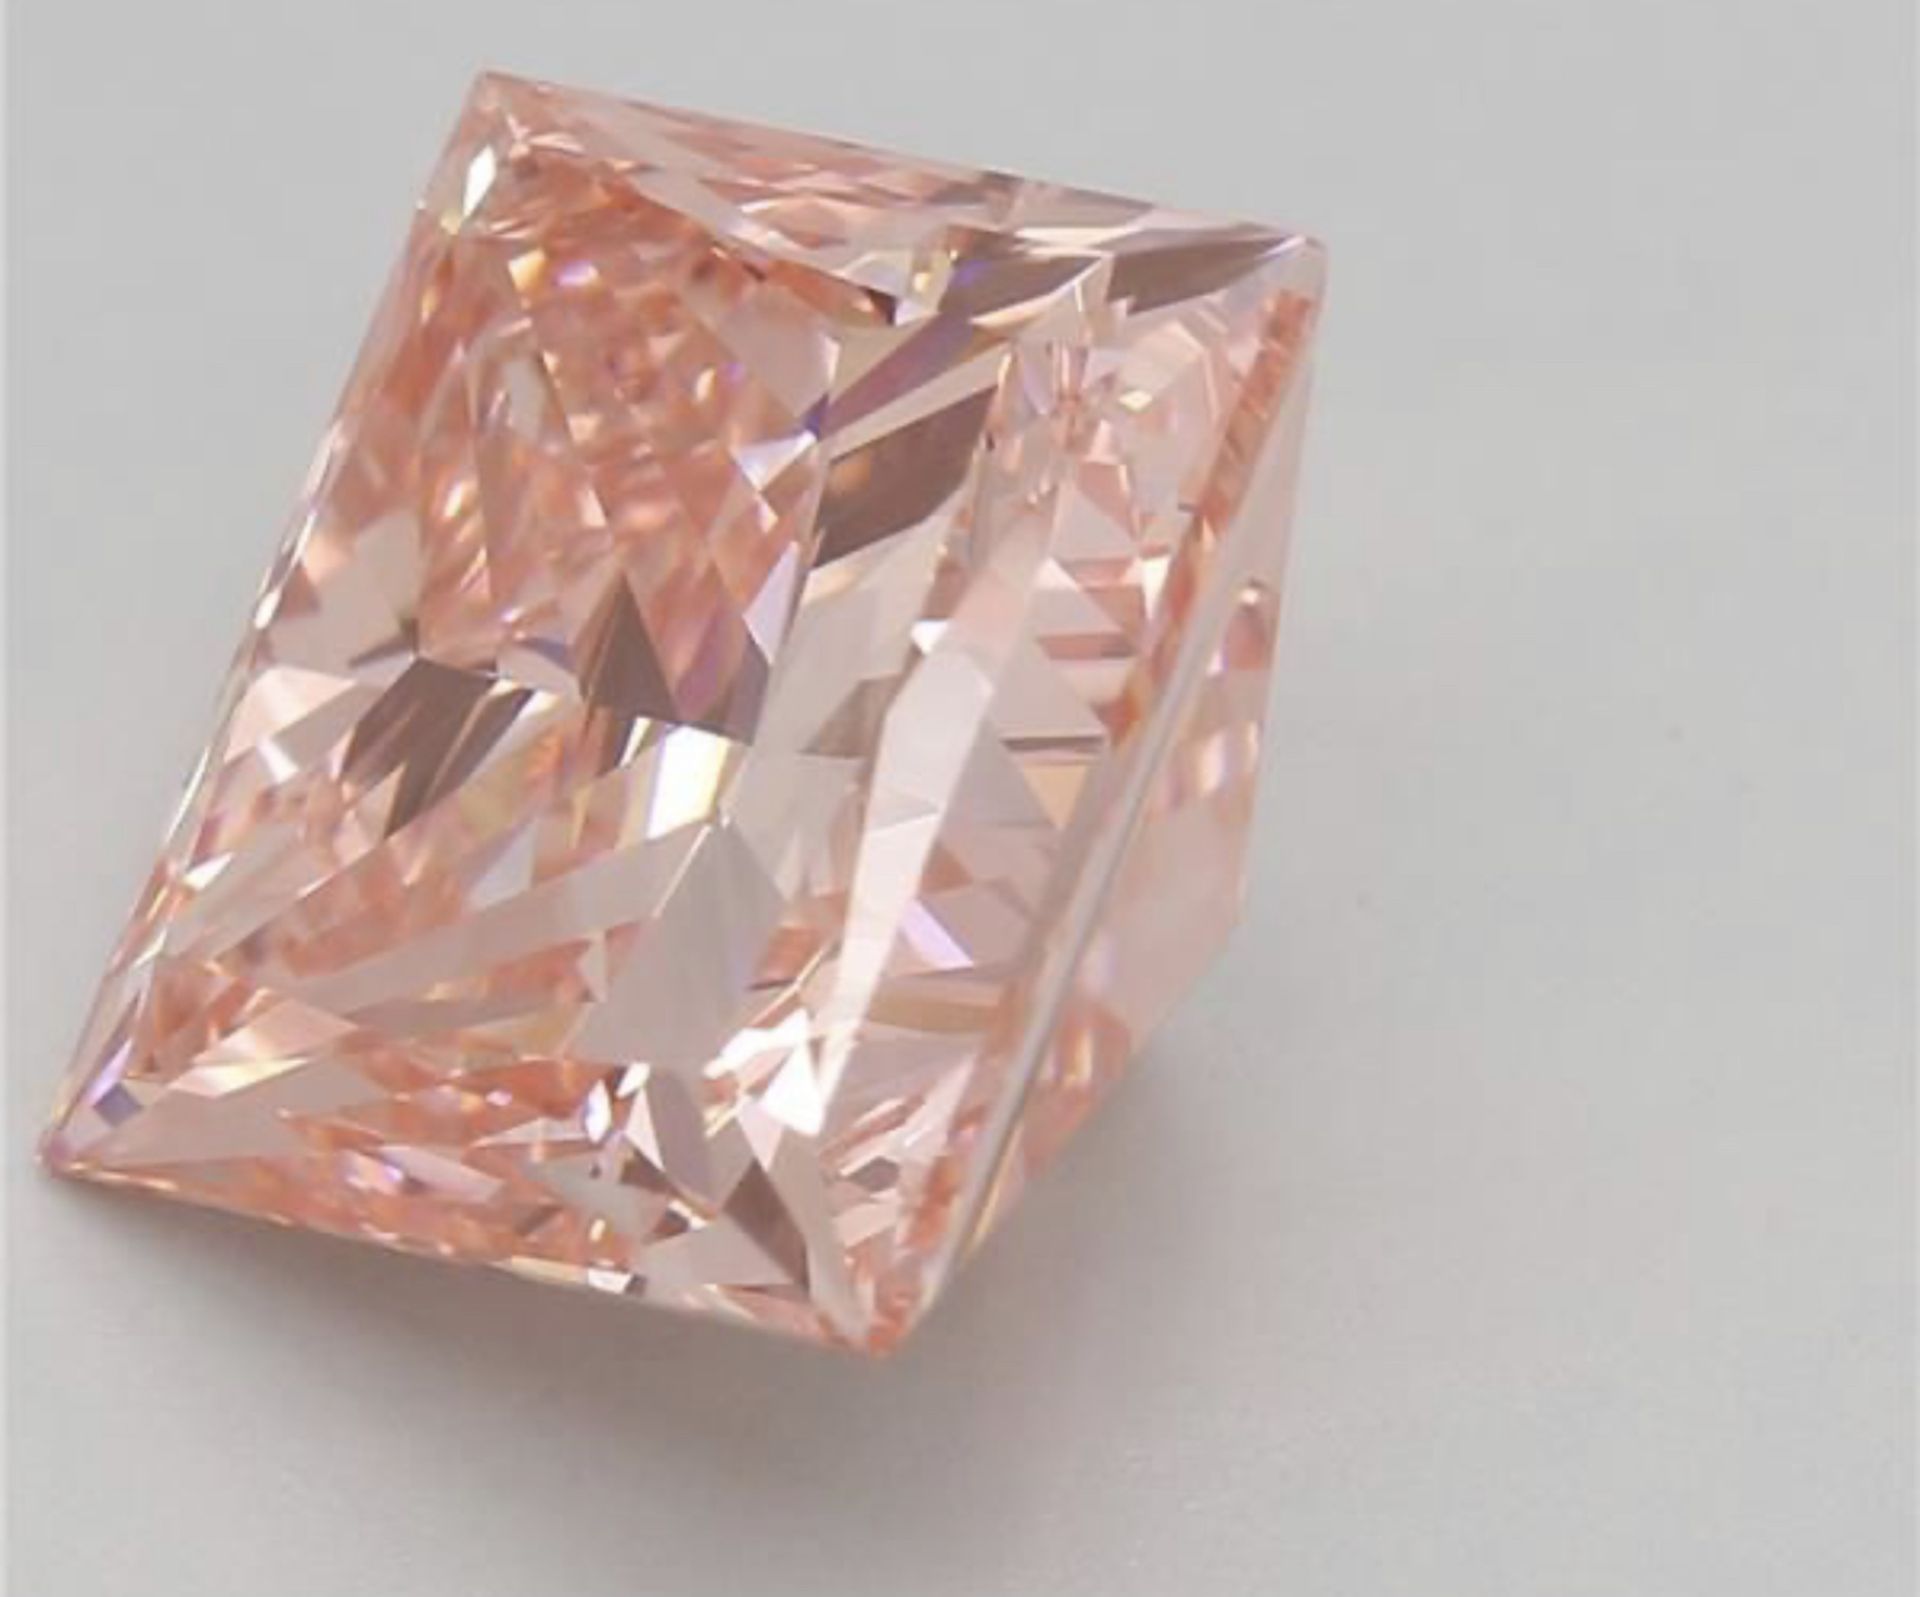 ** ON SALE ** Princess Cut Diamond Fancy Pink Colour VVS2 Clarity 3.02 Carat EX EX - LG593370815 - Image 3 of 8